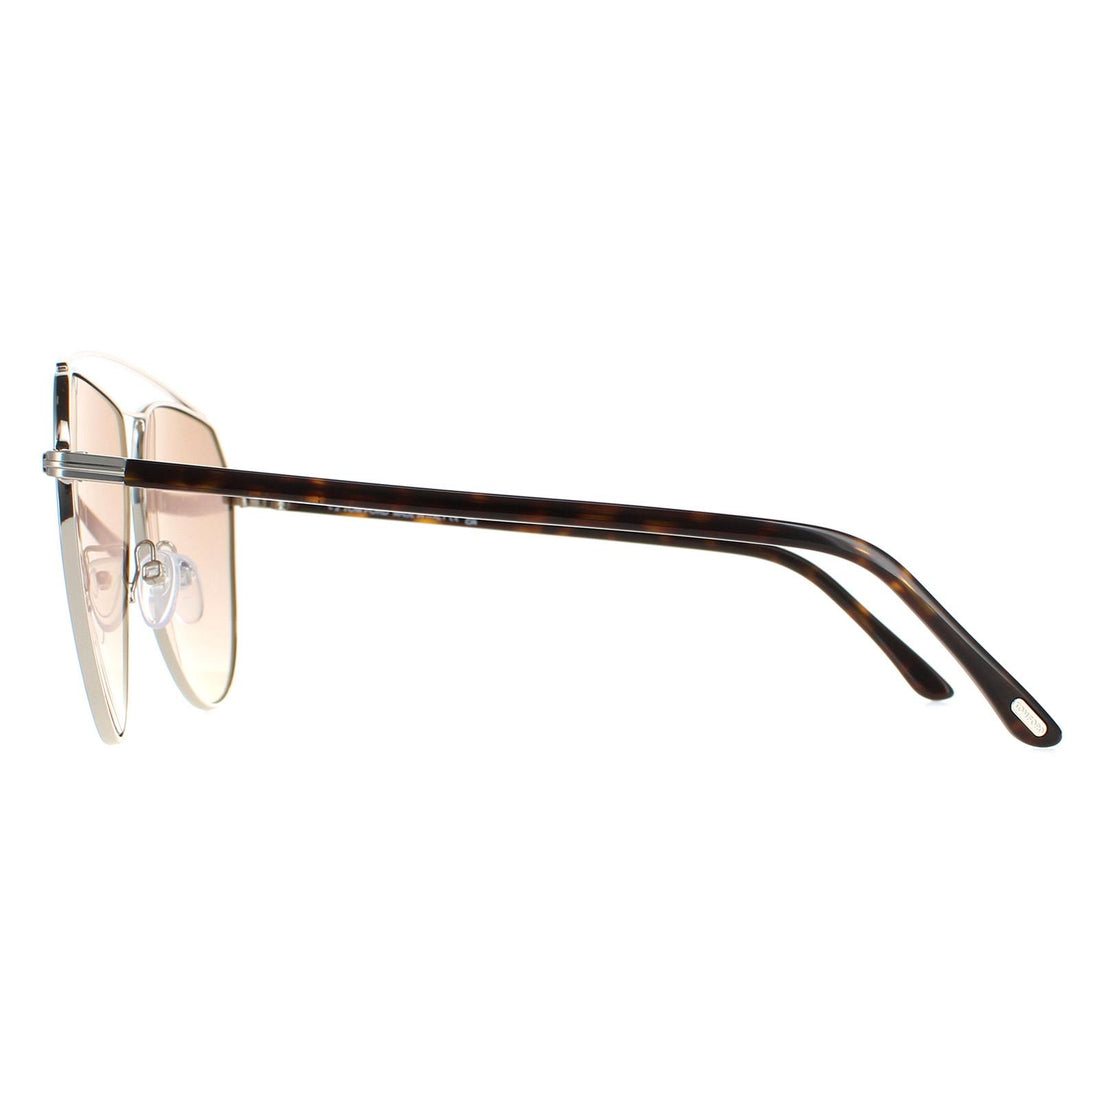 Tom Ford Sunglasses Binx FT0681 16G Silver Havana Brown Silver Gradient Mirror